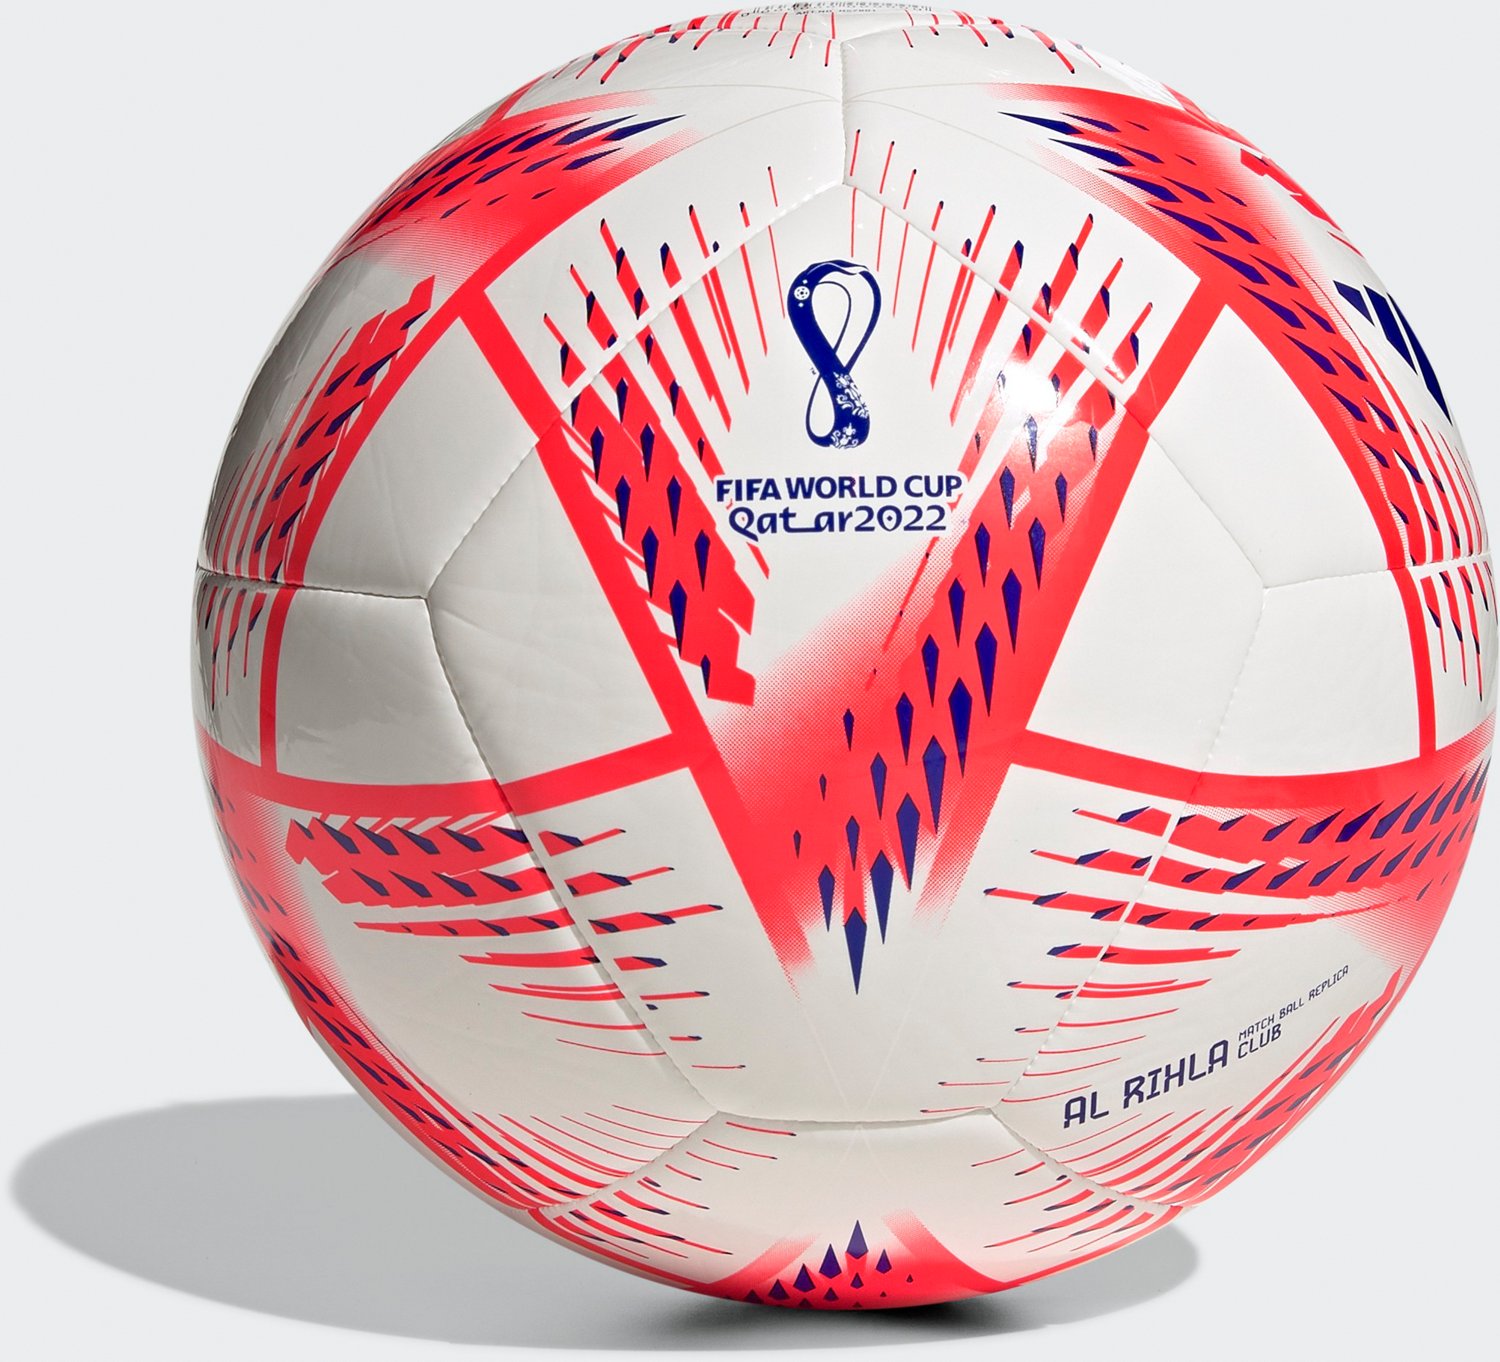 fifa world cup 2022 soccer ball